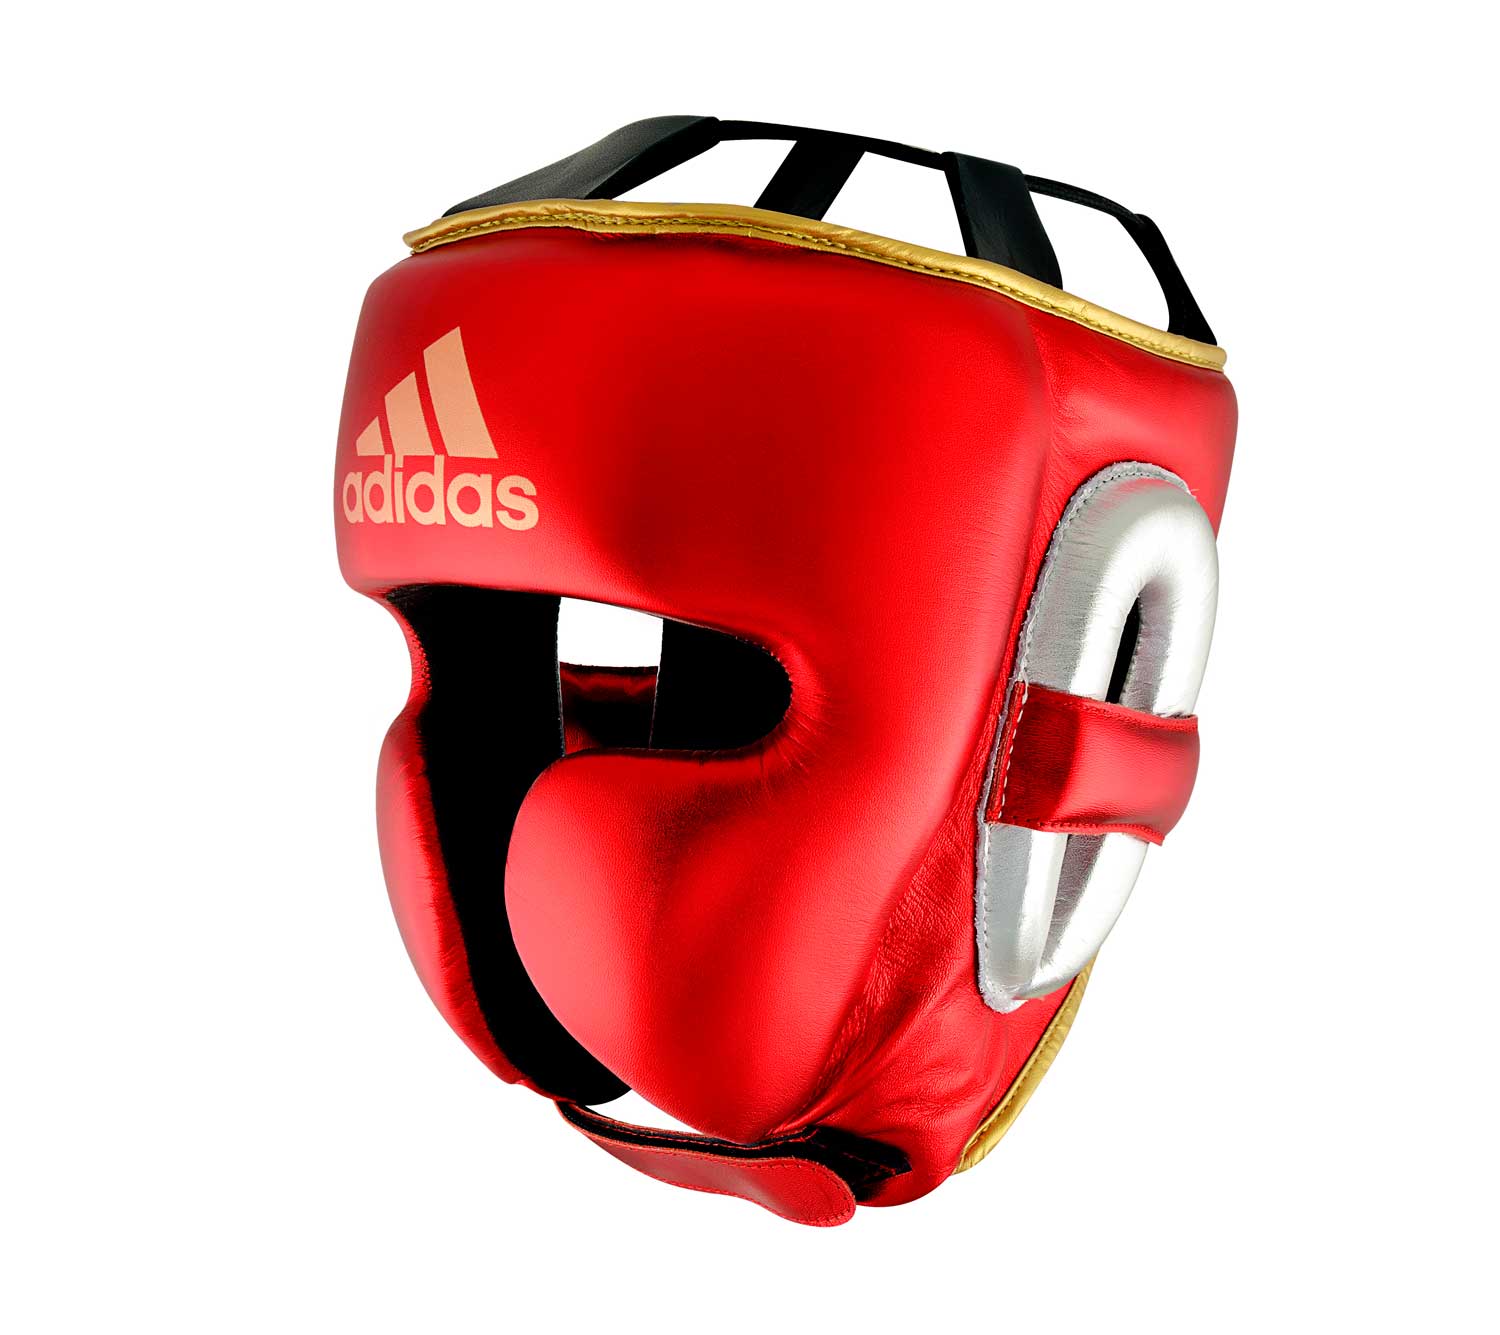 Шлем боксерский Adidas AdiStar Pro Metallic Headgear adiPHG01ProM красно-серебристо-золотой